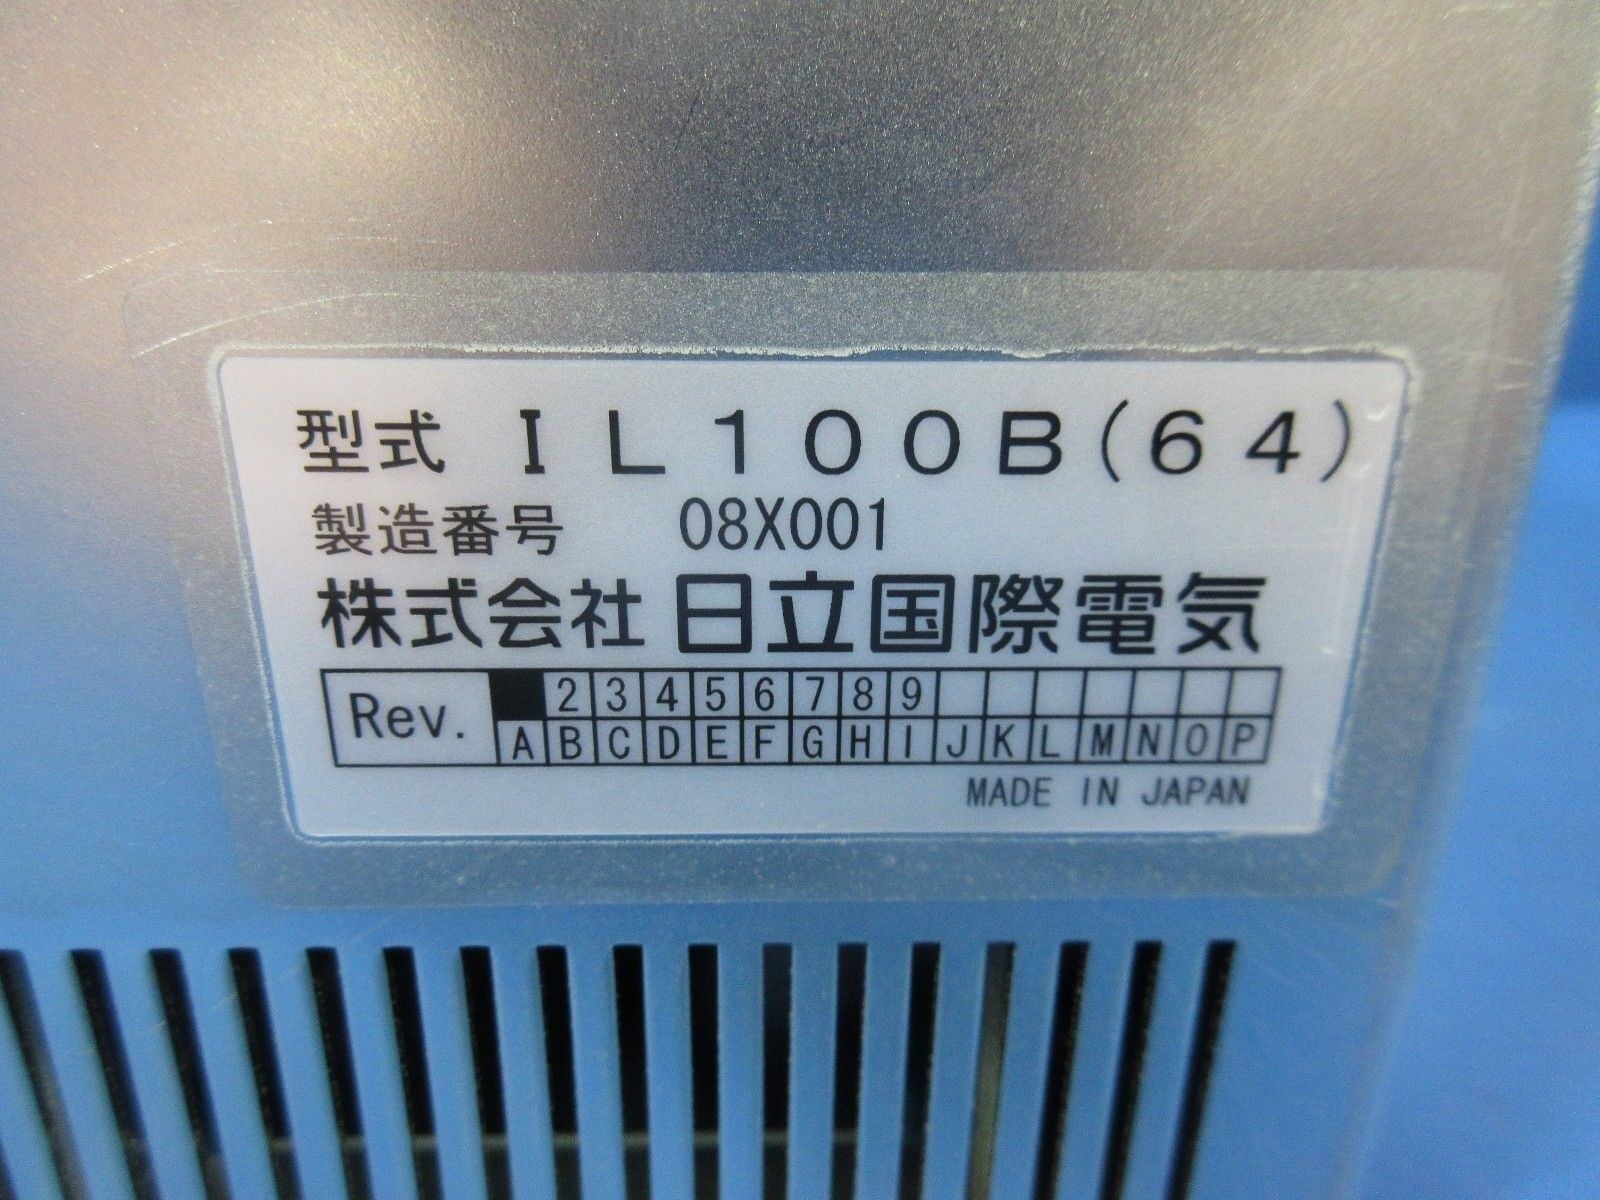 Kokusai Electric IL100B(64) Control Chassis Zestone DD-1203V 300mm Used Working